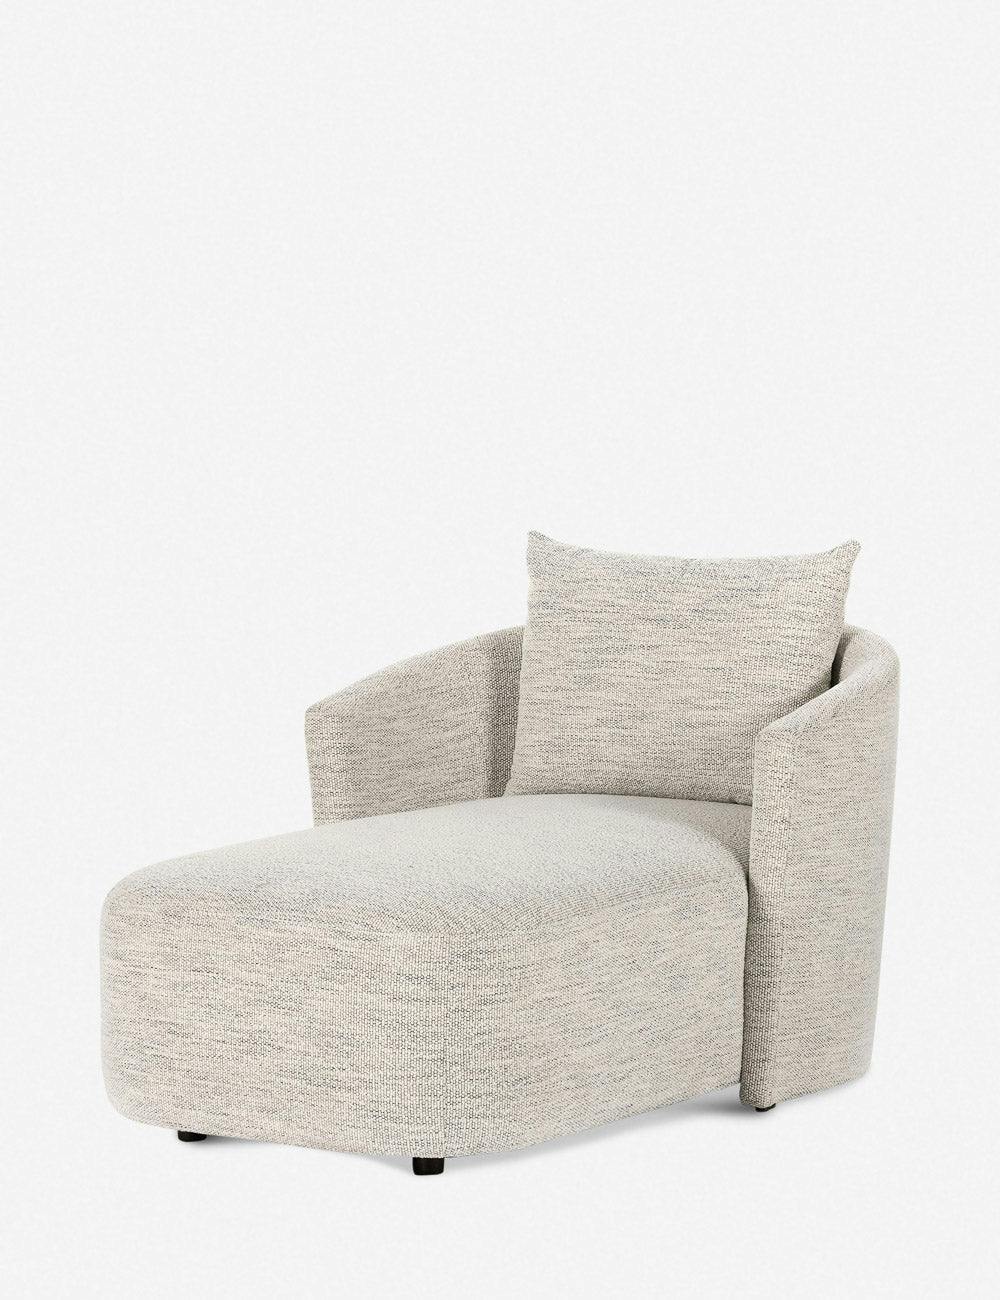 Juniper Grey Modern Classic Chaise Lounge